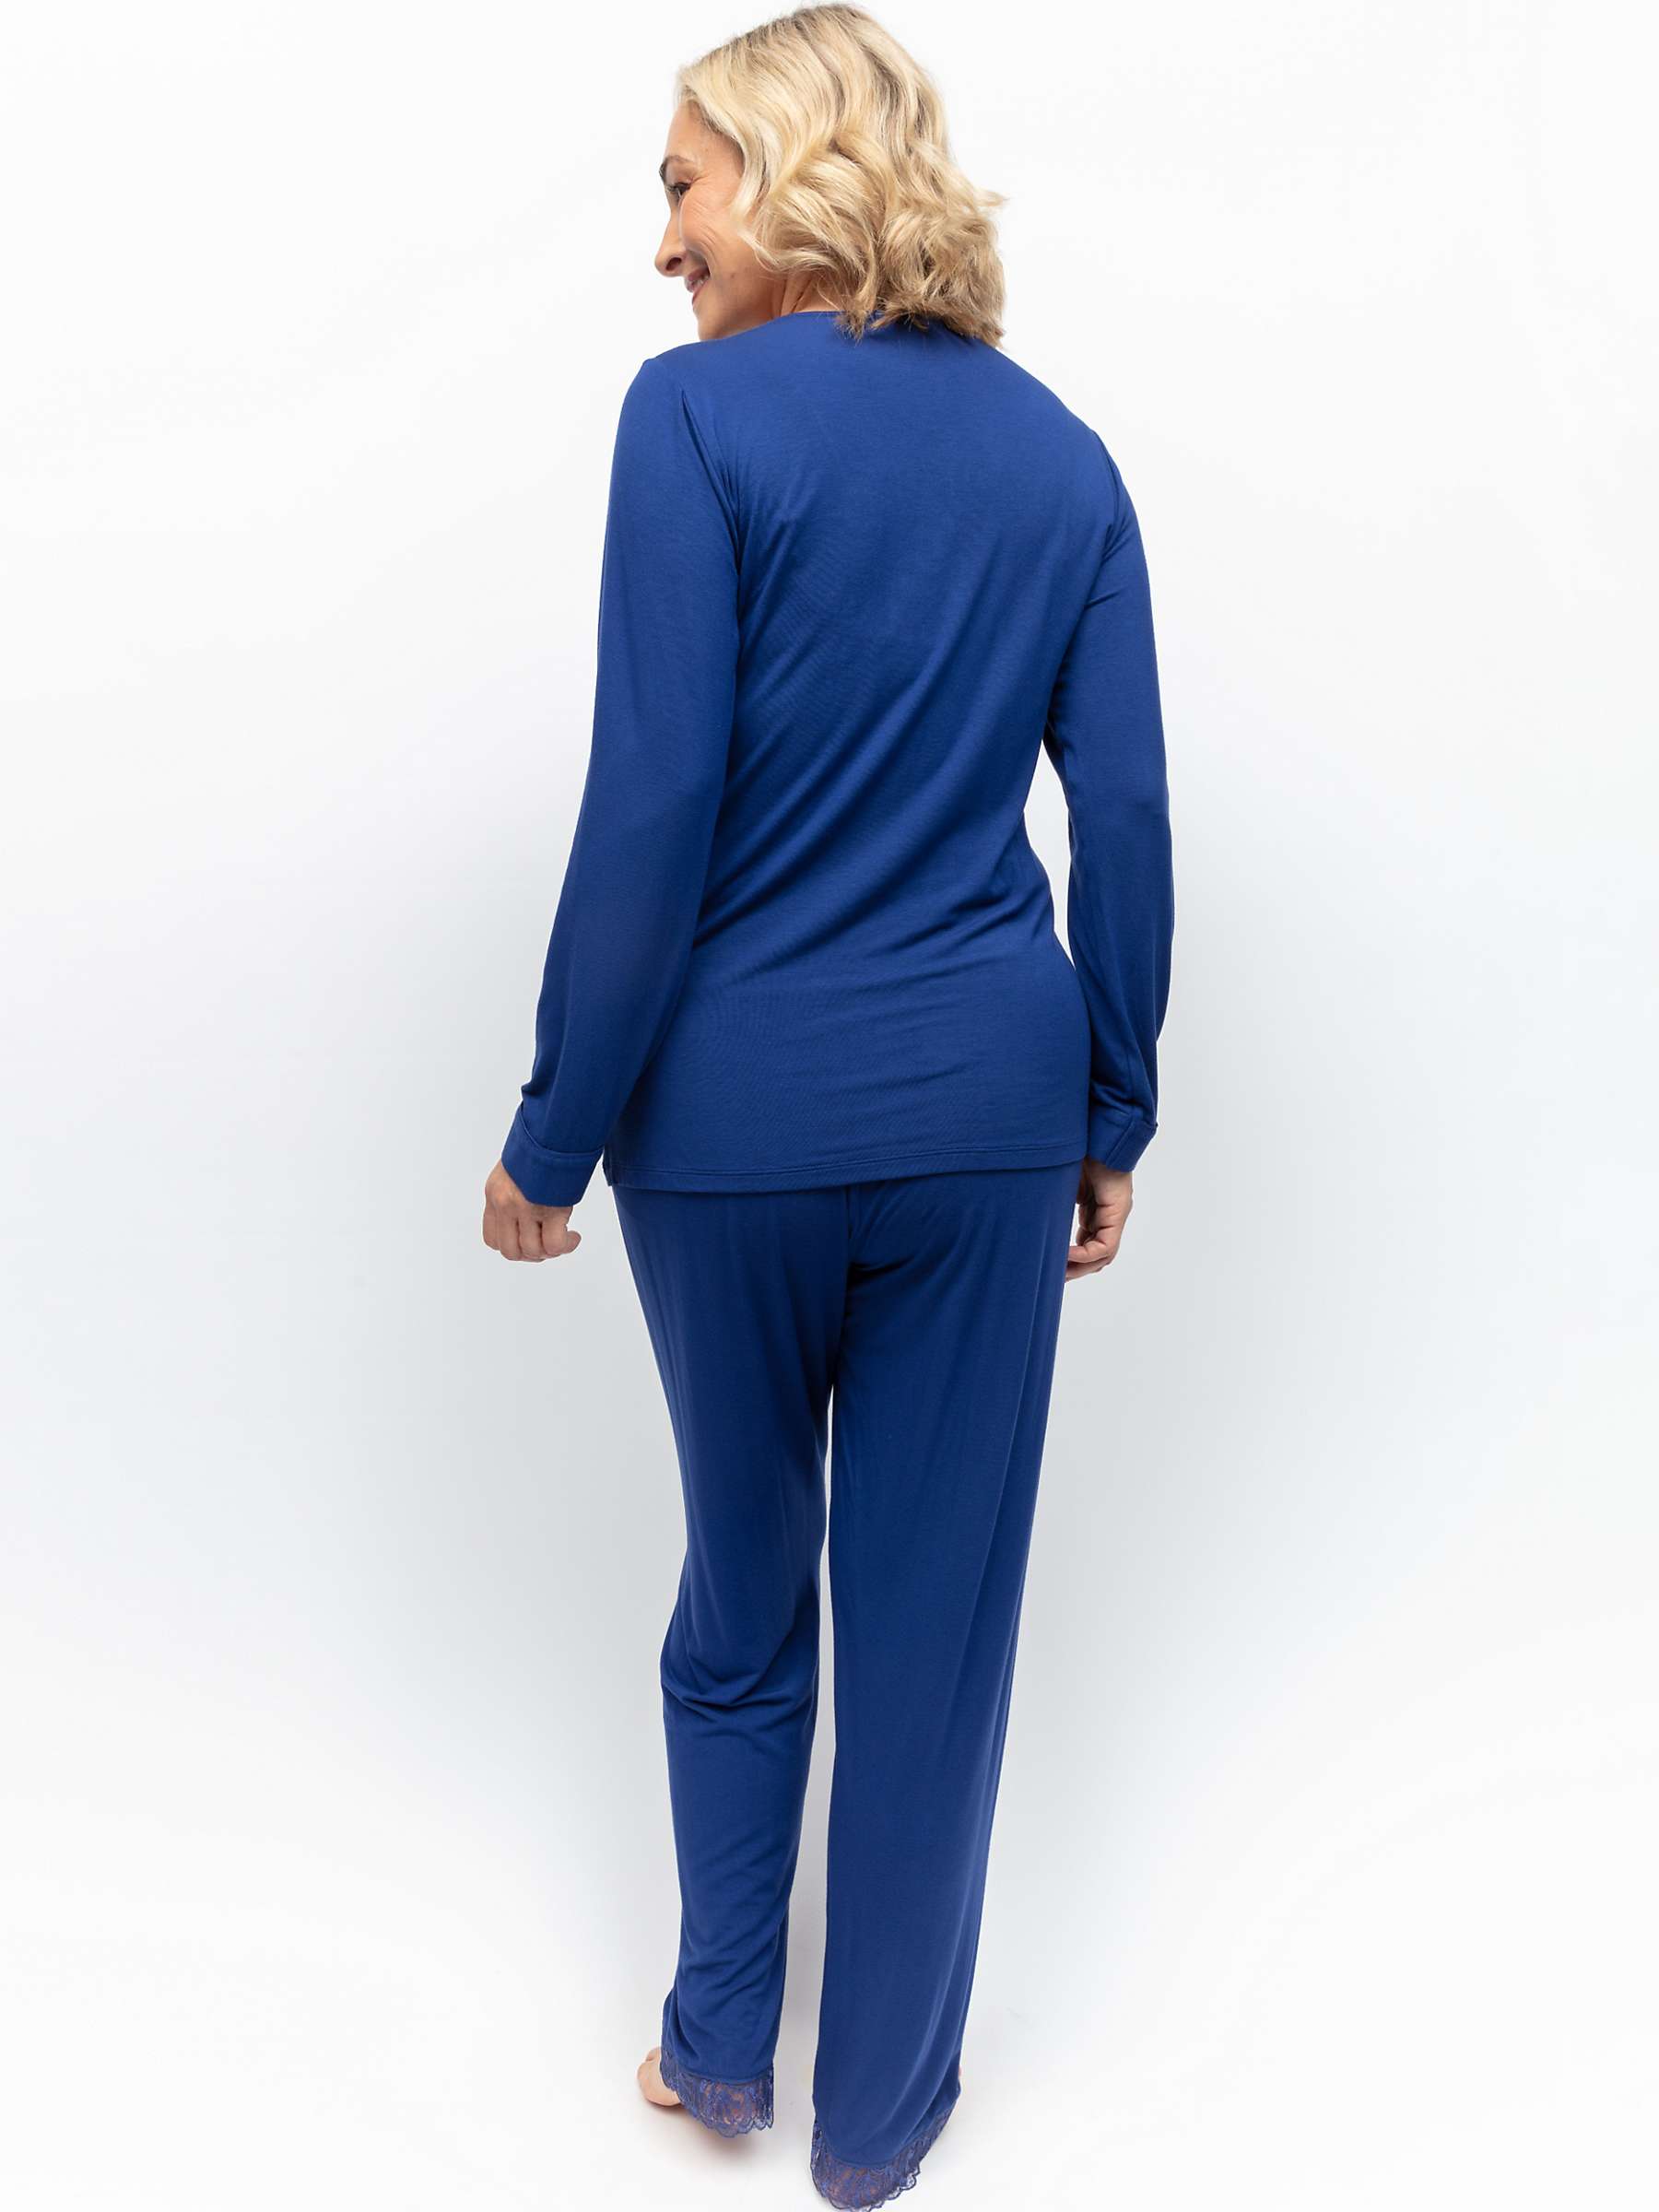 Buy Nora Rose by Cyberjammies Ceclia Jersey Pyjama Set, Navy Online at johnlewis.com